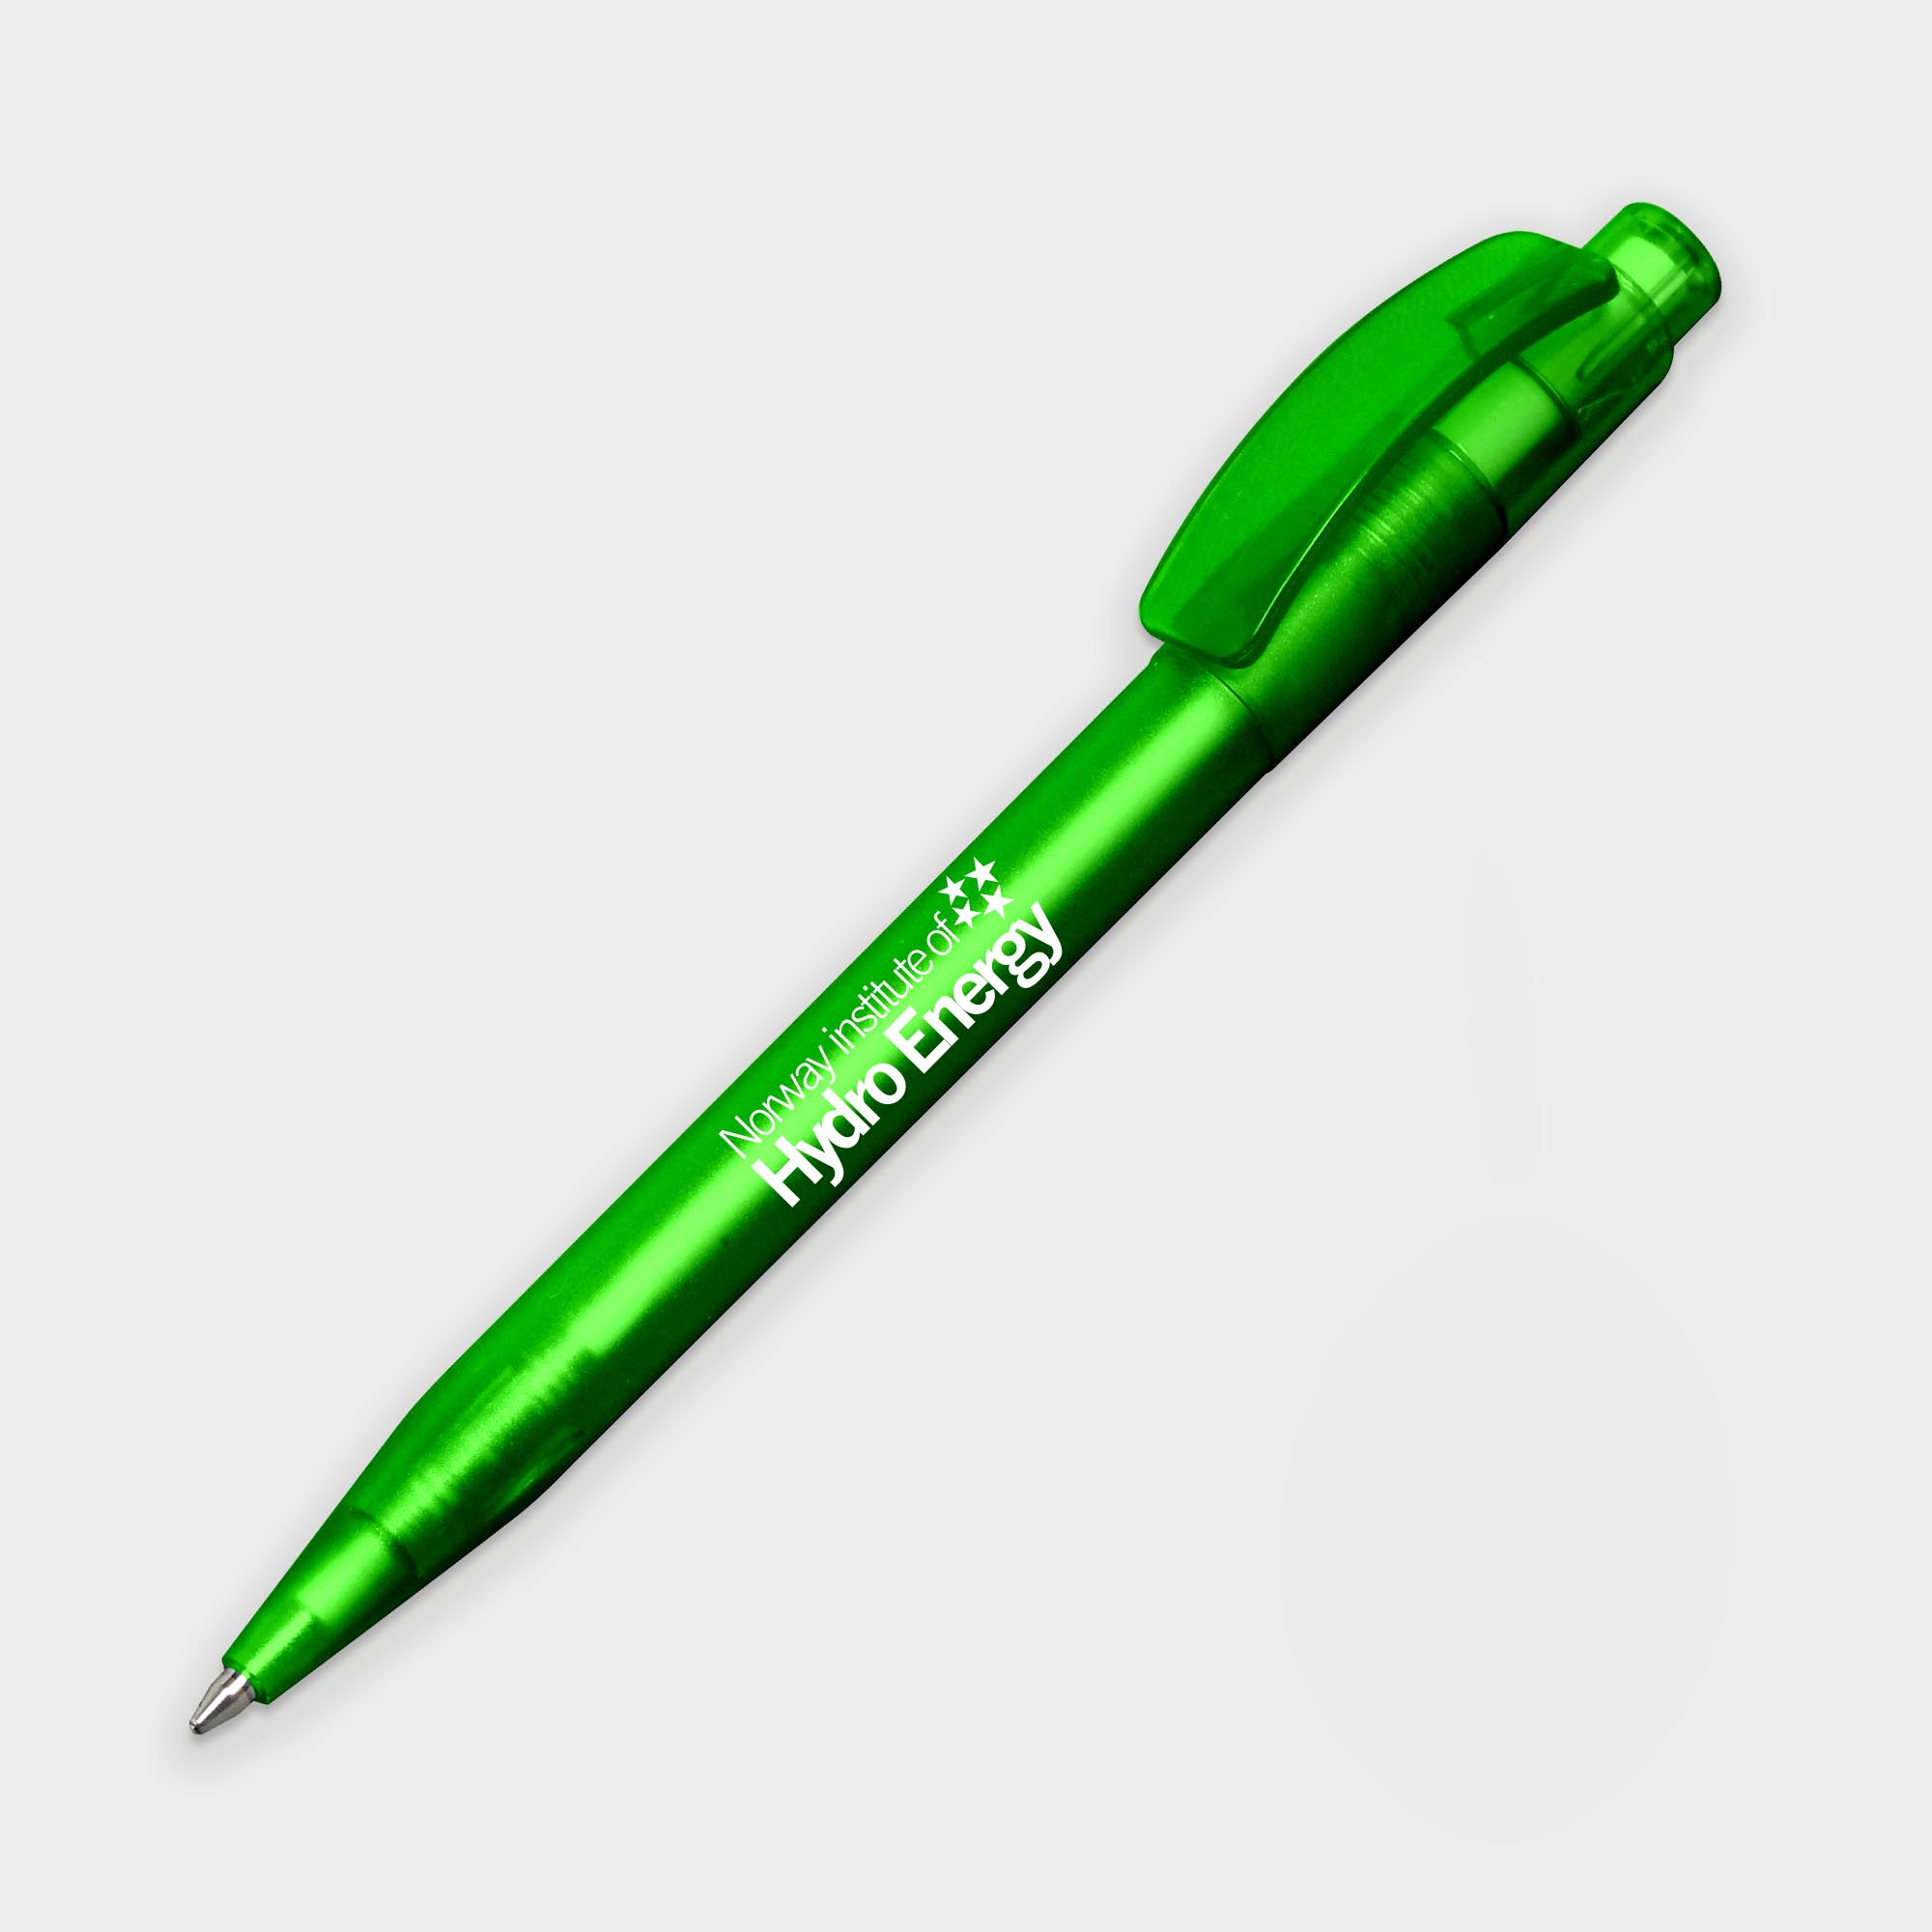 Corporate Indus Biodegradable Pen